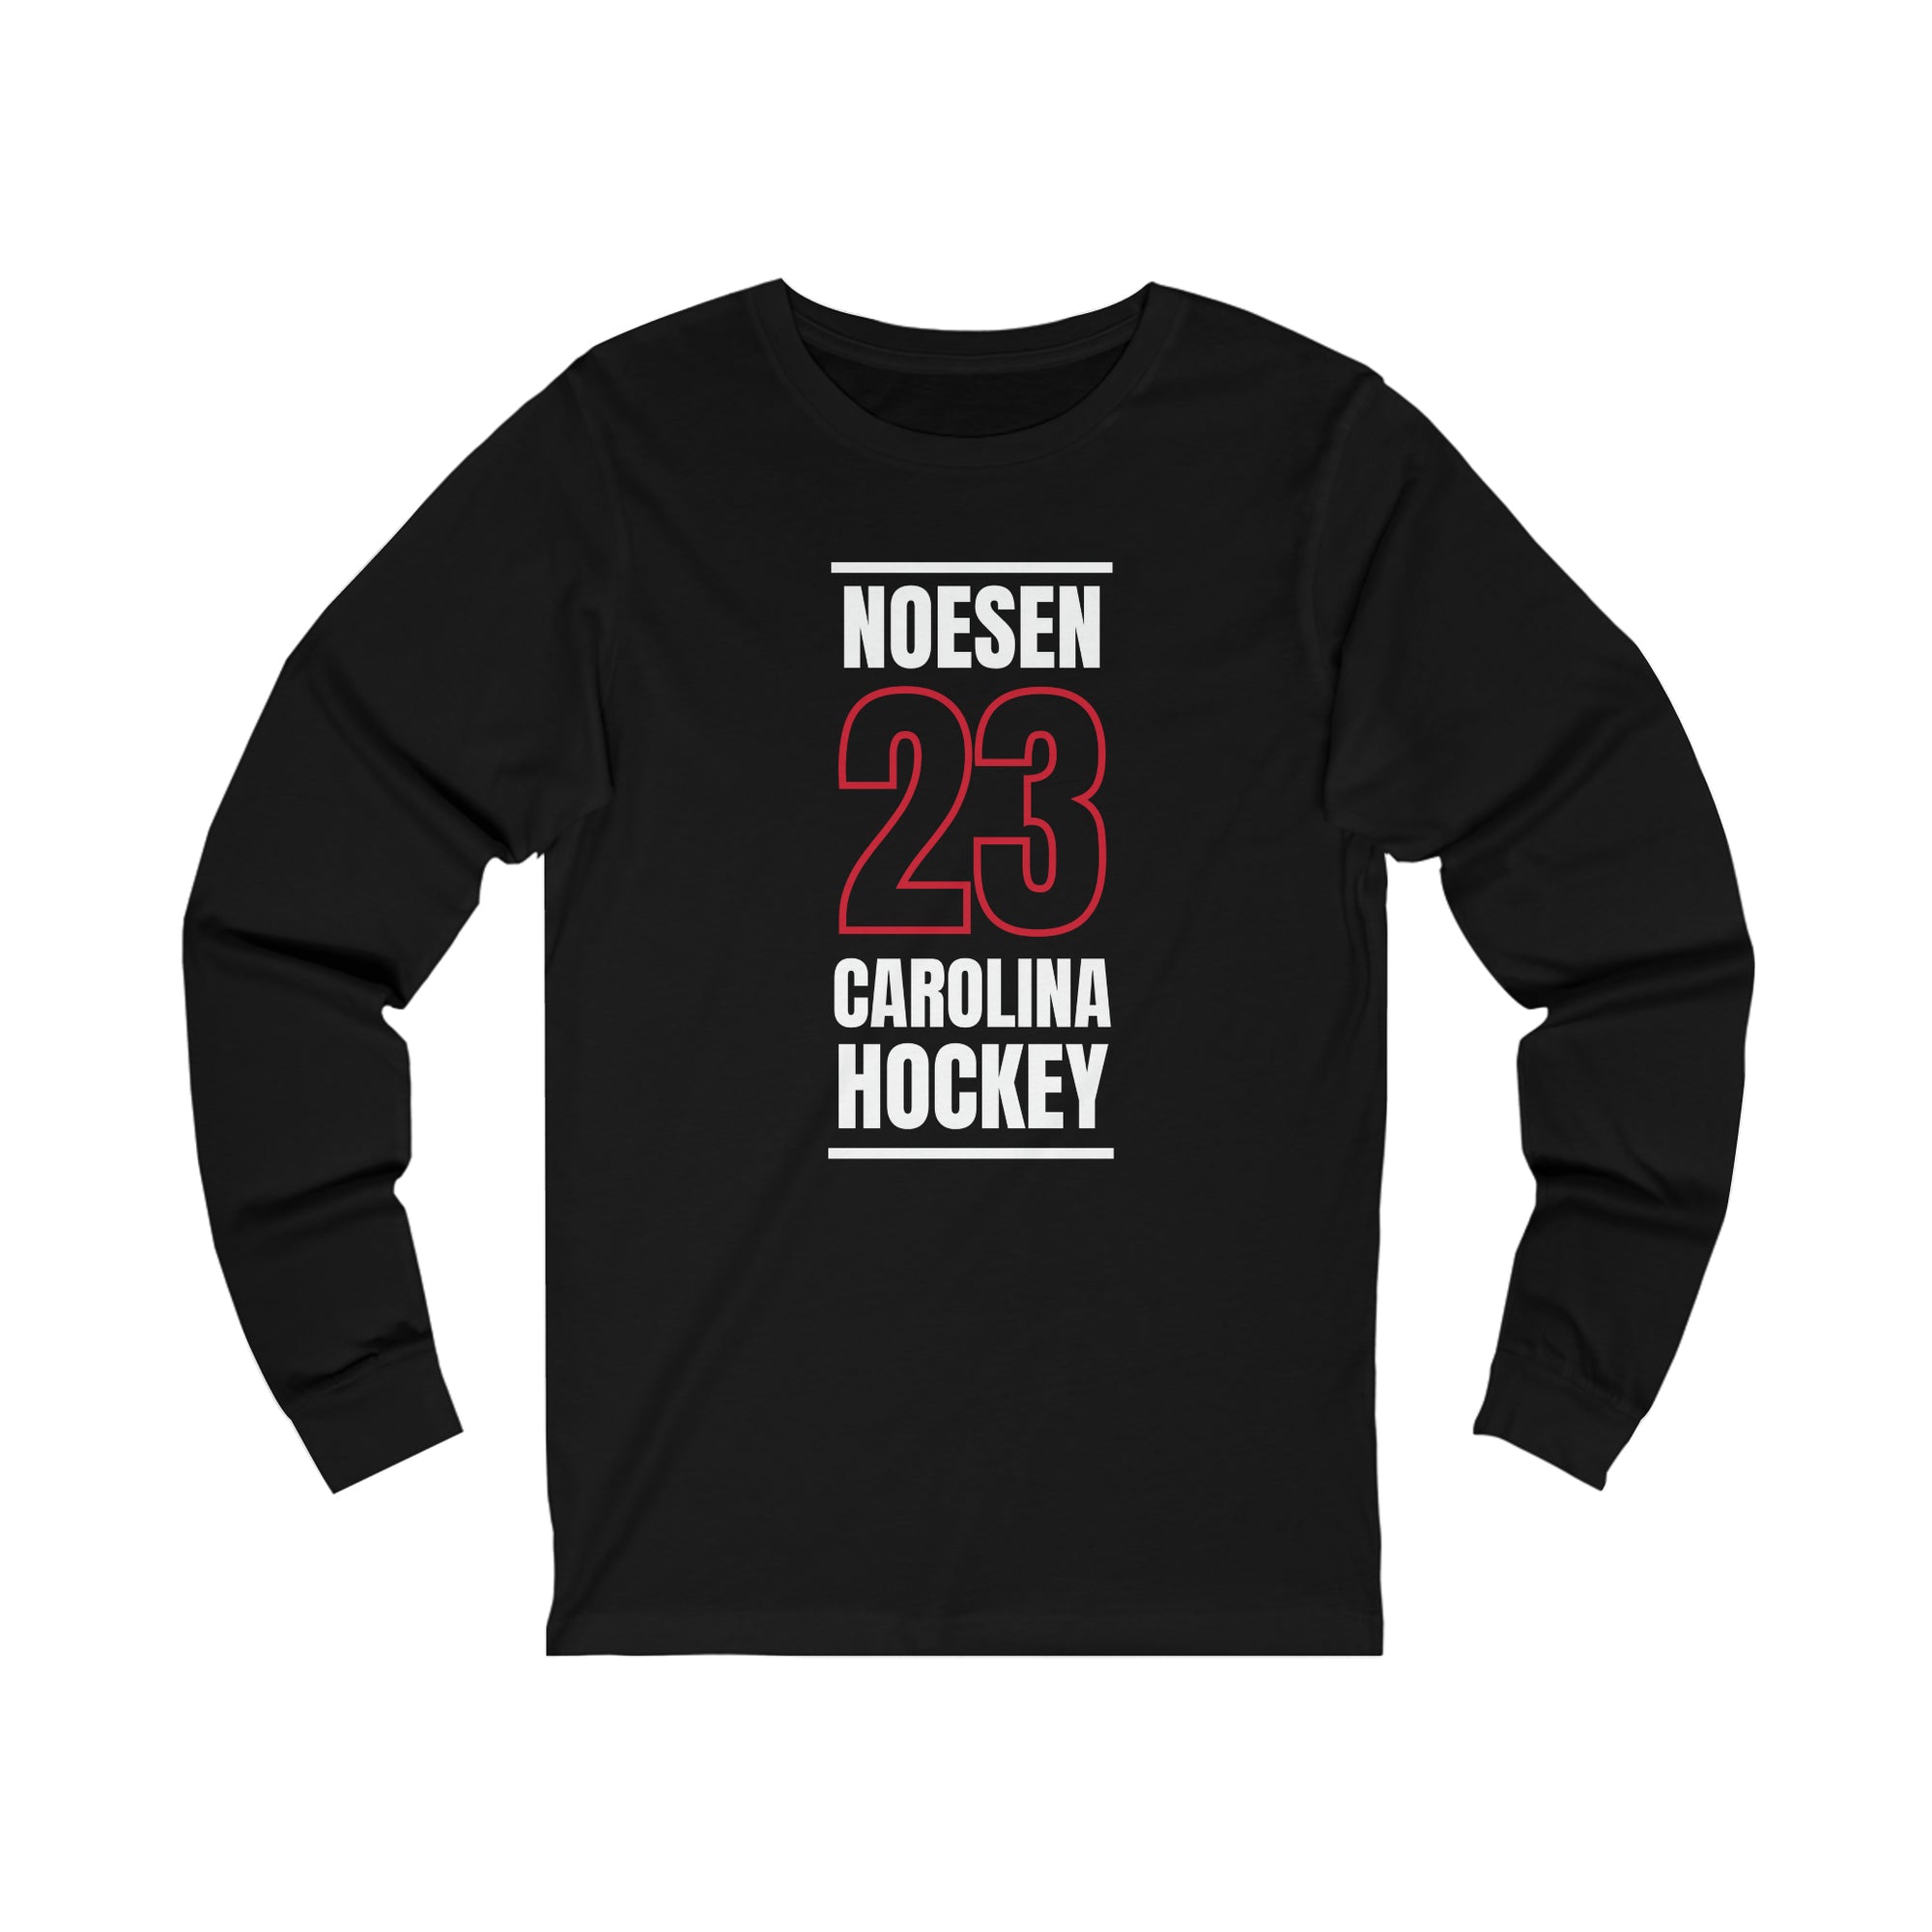 Noesen 23 Carolina Hockey Black Vertical Design Unisex Jersey Long Sleeve Shirt